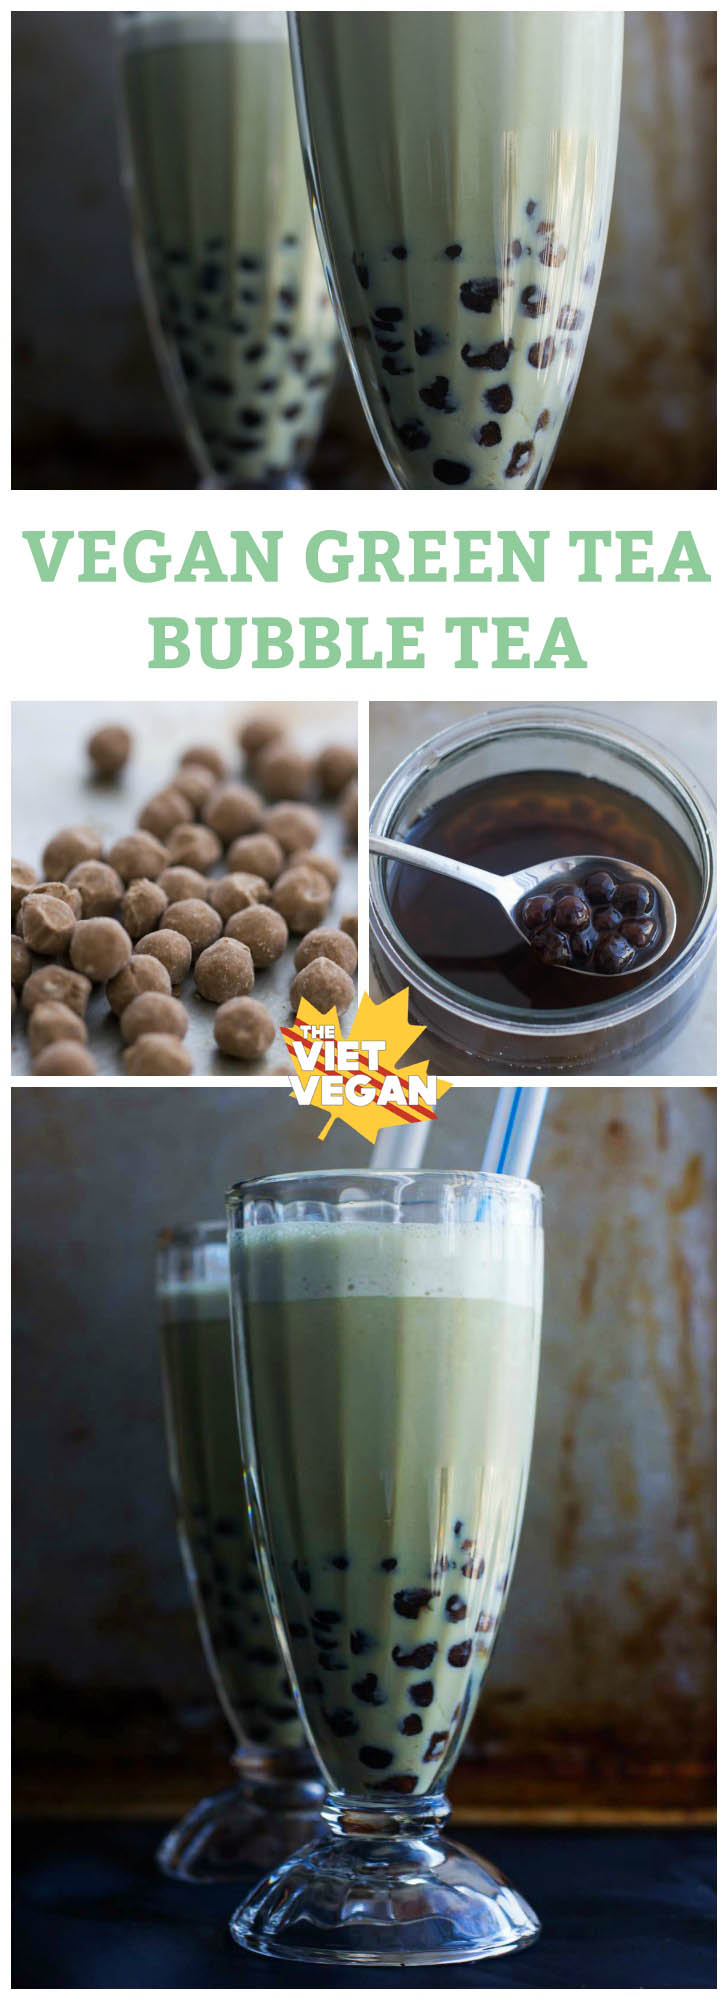 Vegan Green Tea Bubble Tea | The Viet Vegan | DIY bubble tea, much cheaper, super easy, and you can sweeten to your taste!